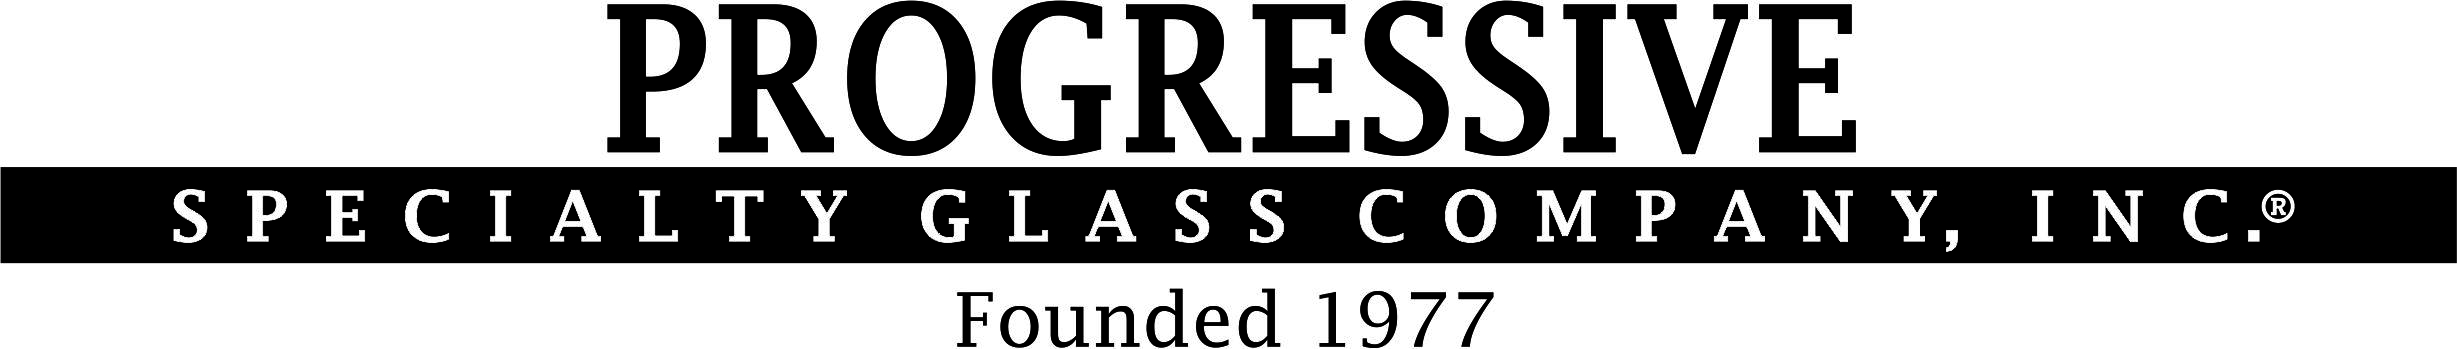 Progressive Specialty Glass Company Inc